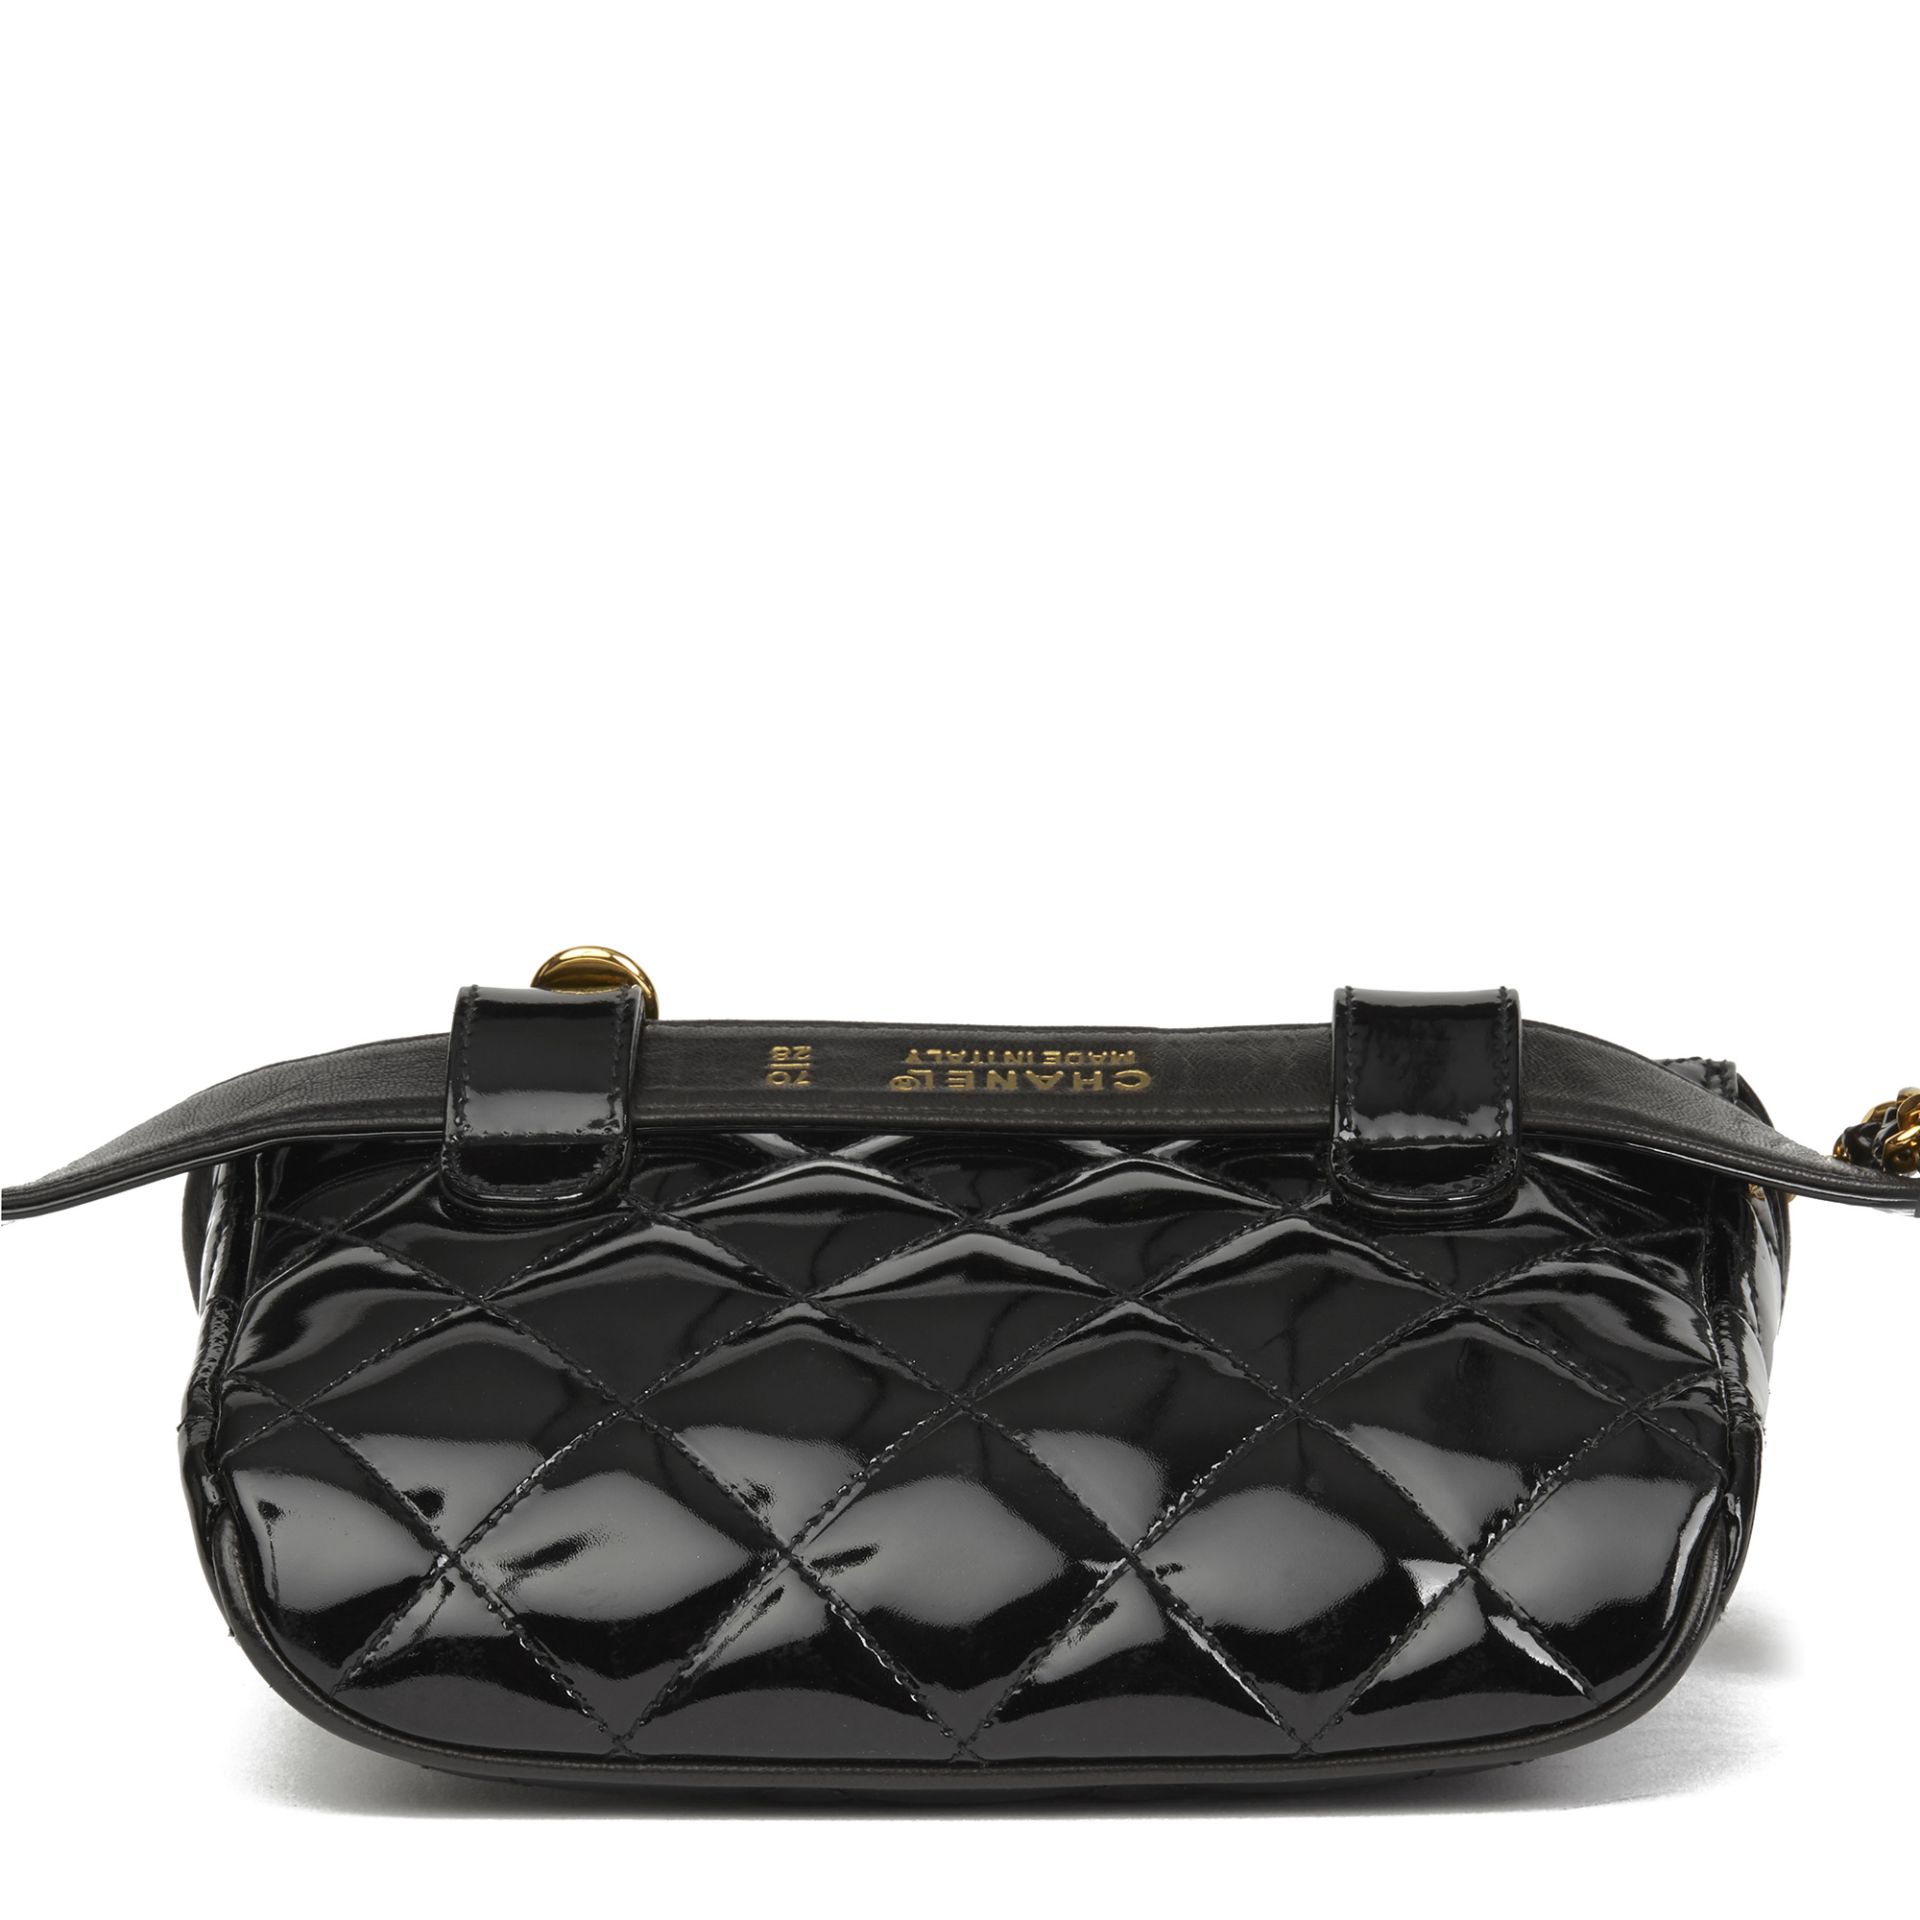 Chanel Black Quilted Patent Leather Vintage Timeless Belt Bag - Image 9 of 12